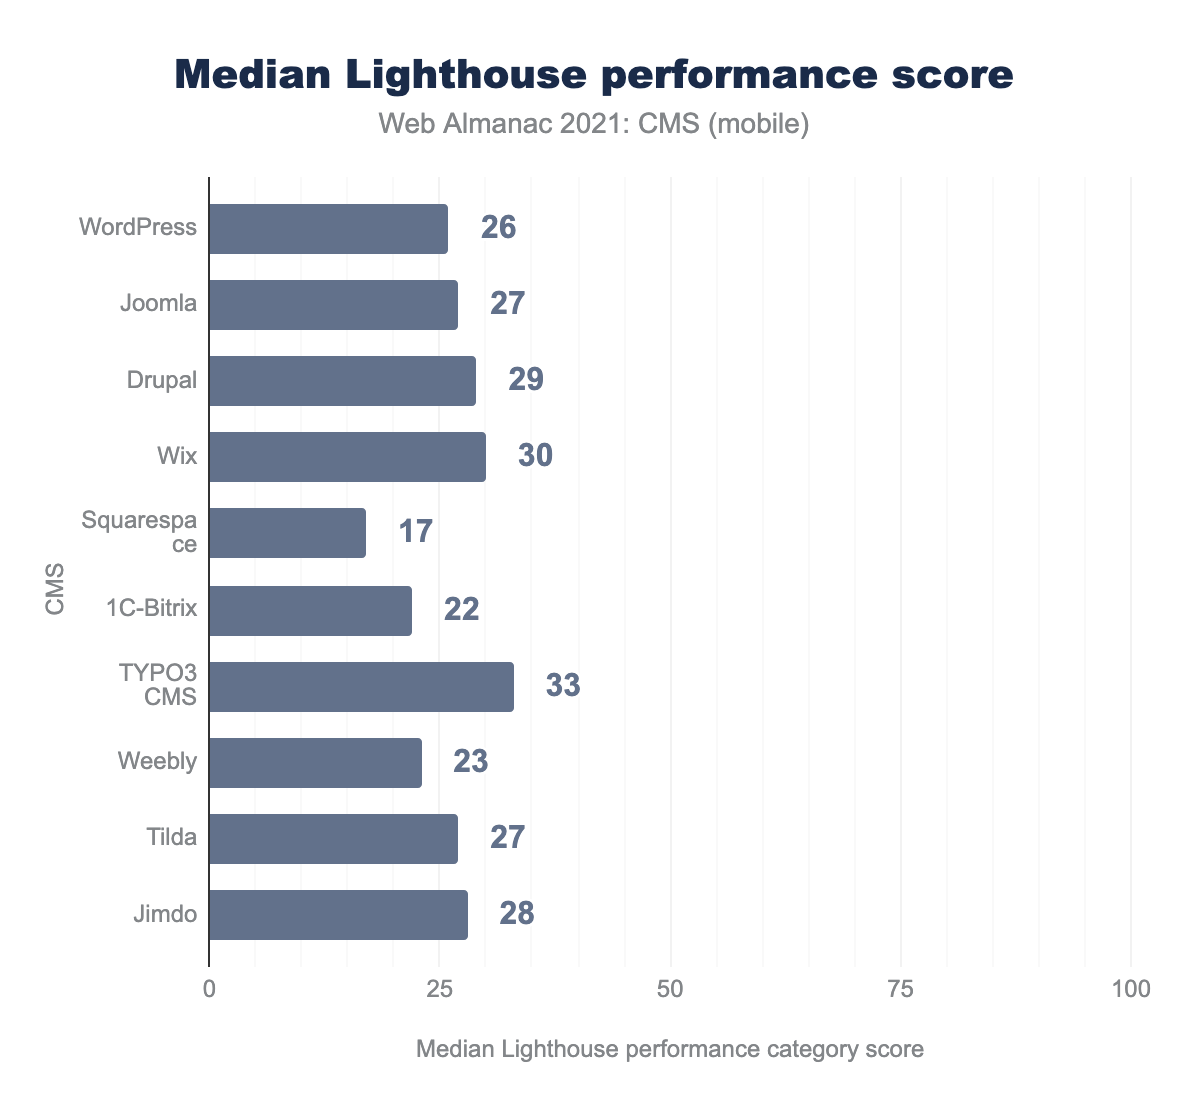 Top 10 CMSs median Lighthouse performance score.